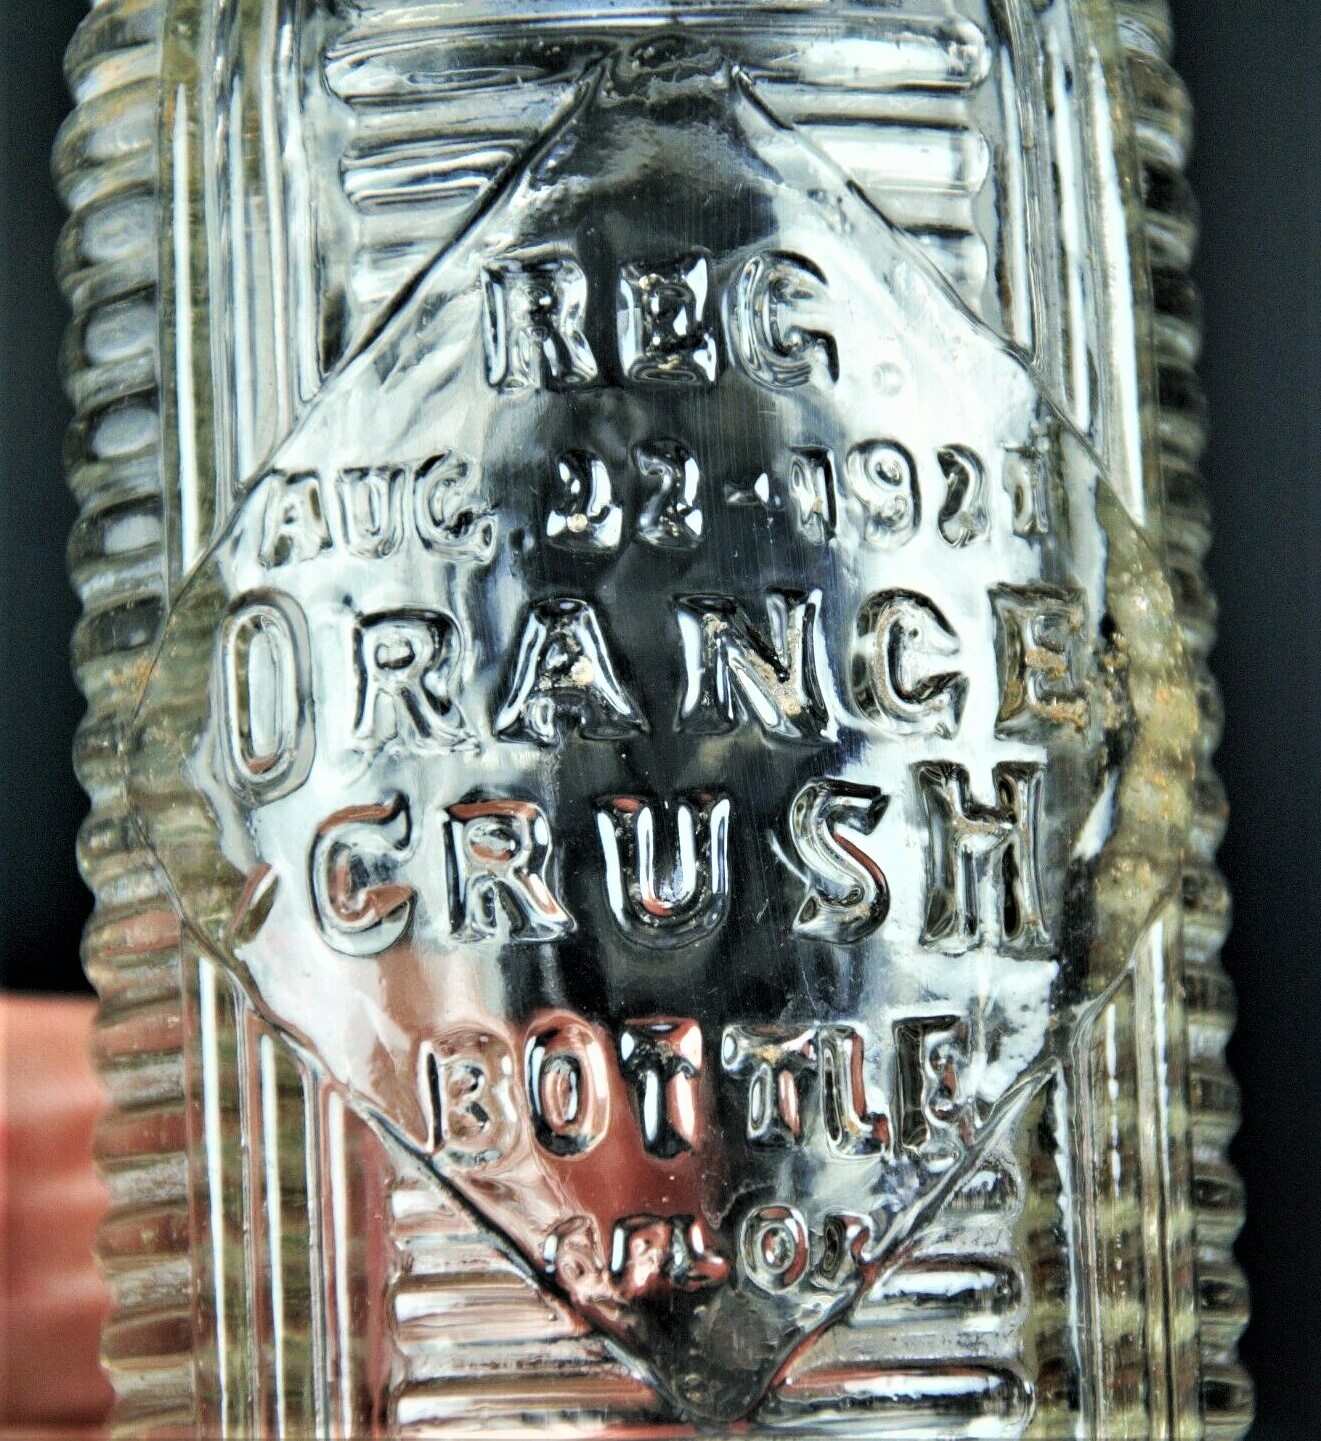 Orange Crush Bottle Aug 22, 1921 REG. Cropped.jpg